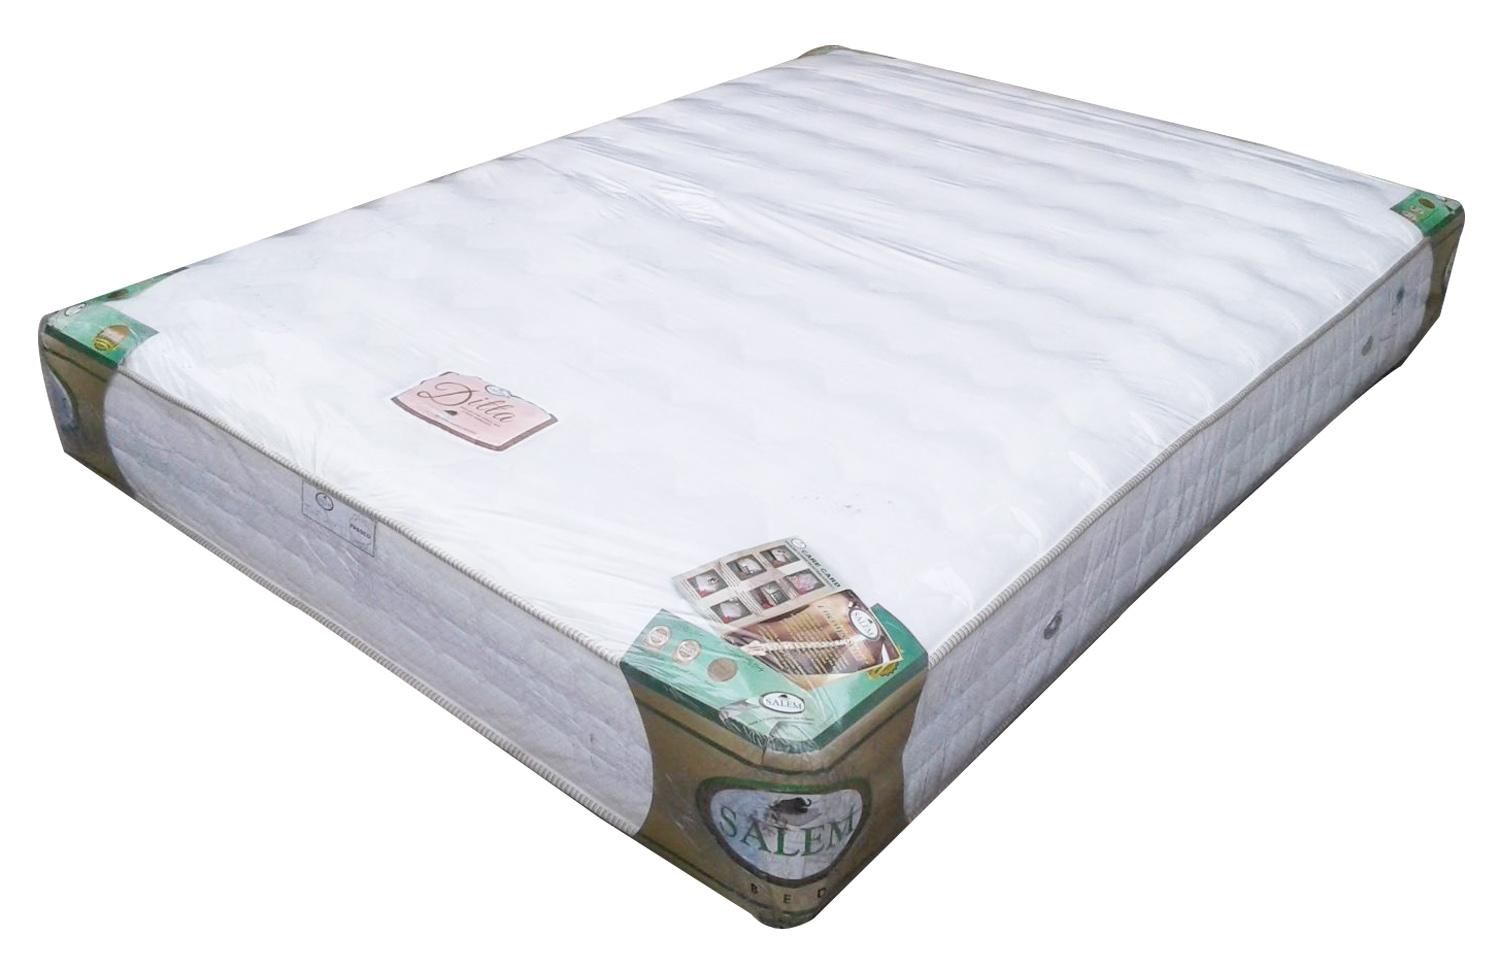 salem bed spring mattress